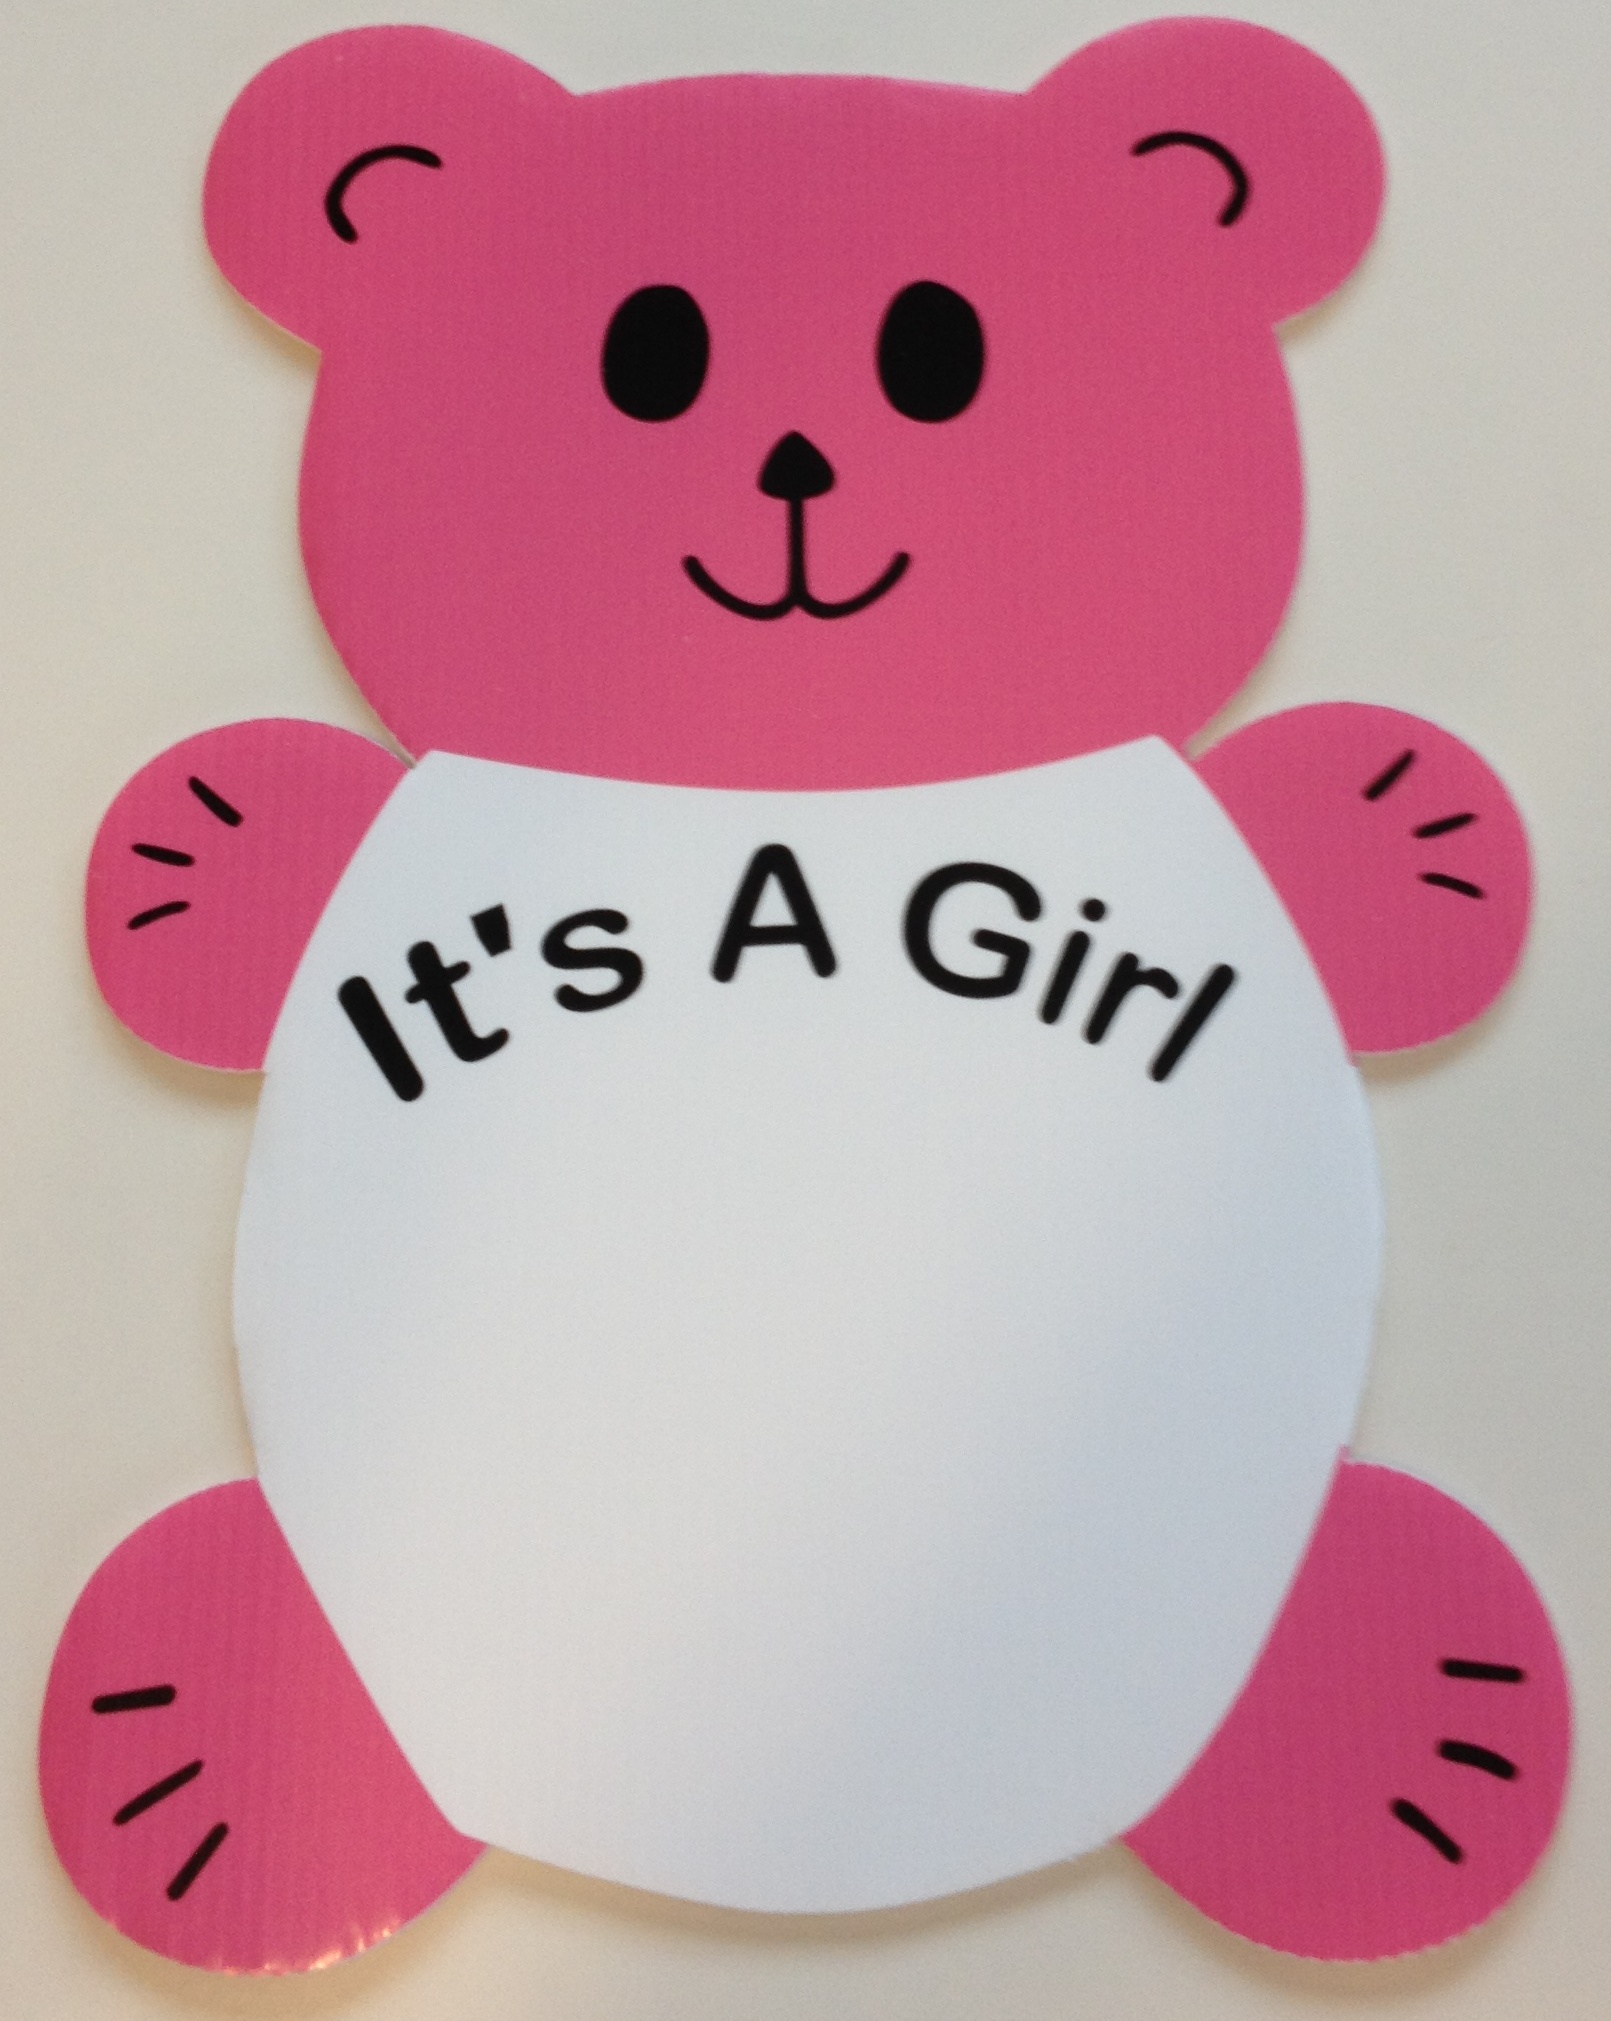 It's A Girl Flag 3x5 Polyester Stork Baby Pink Teddy Bear Blocks Mobile